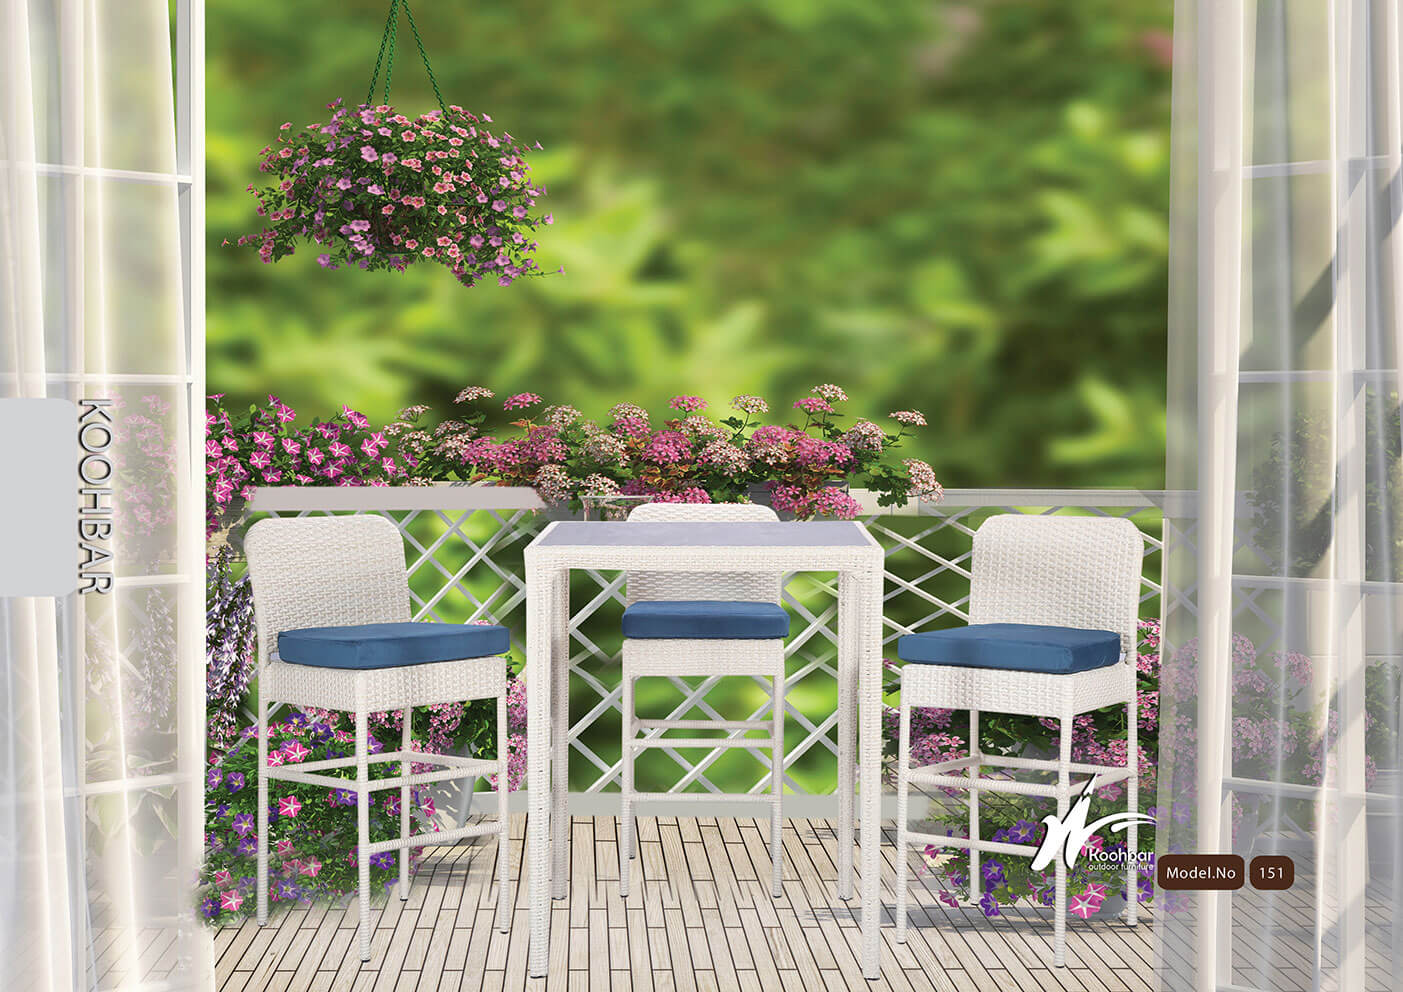 kohbar patio conversation sets 151 model0 - ست میز صندلی بار حصیری کوهبر مدل ۱۵۱ -  - patio-bar-furniture